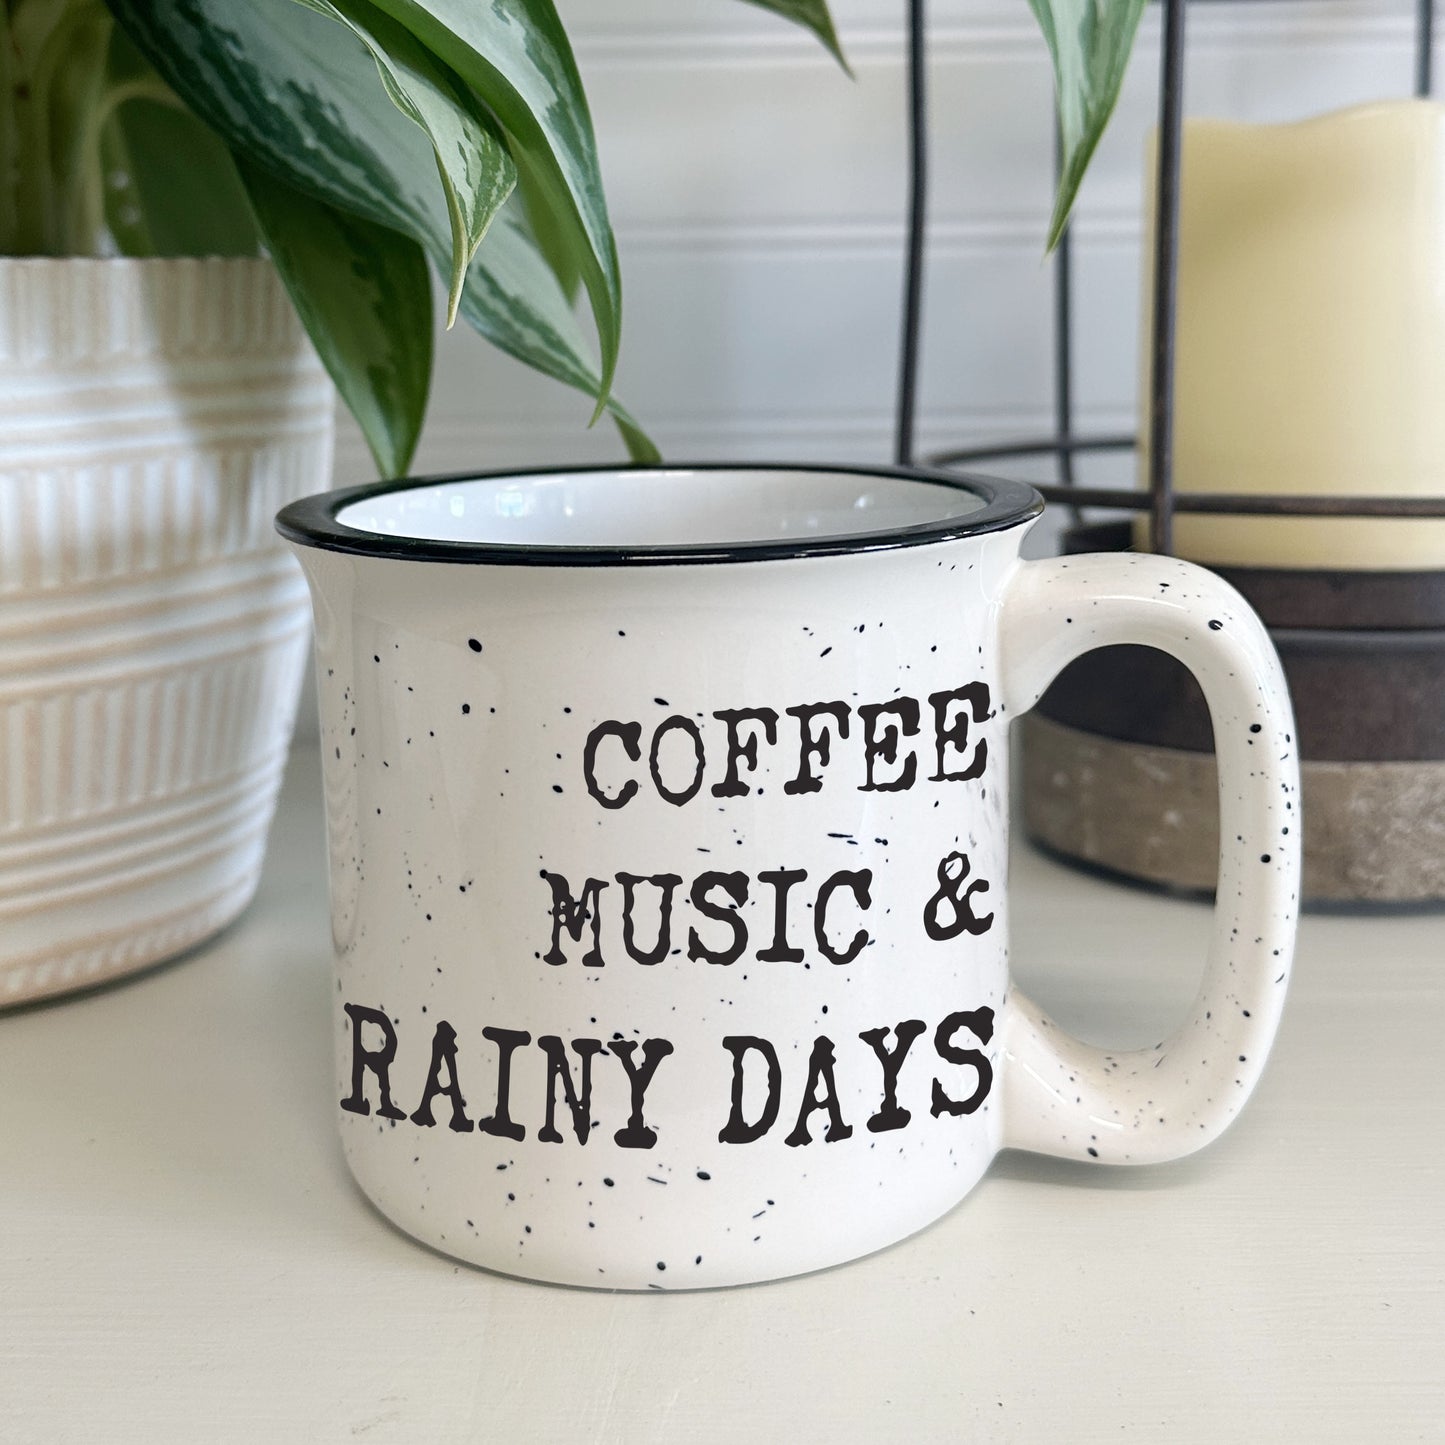 Personalized Favorite Things Camp Style Ceramic Coffee Mug